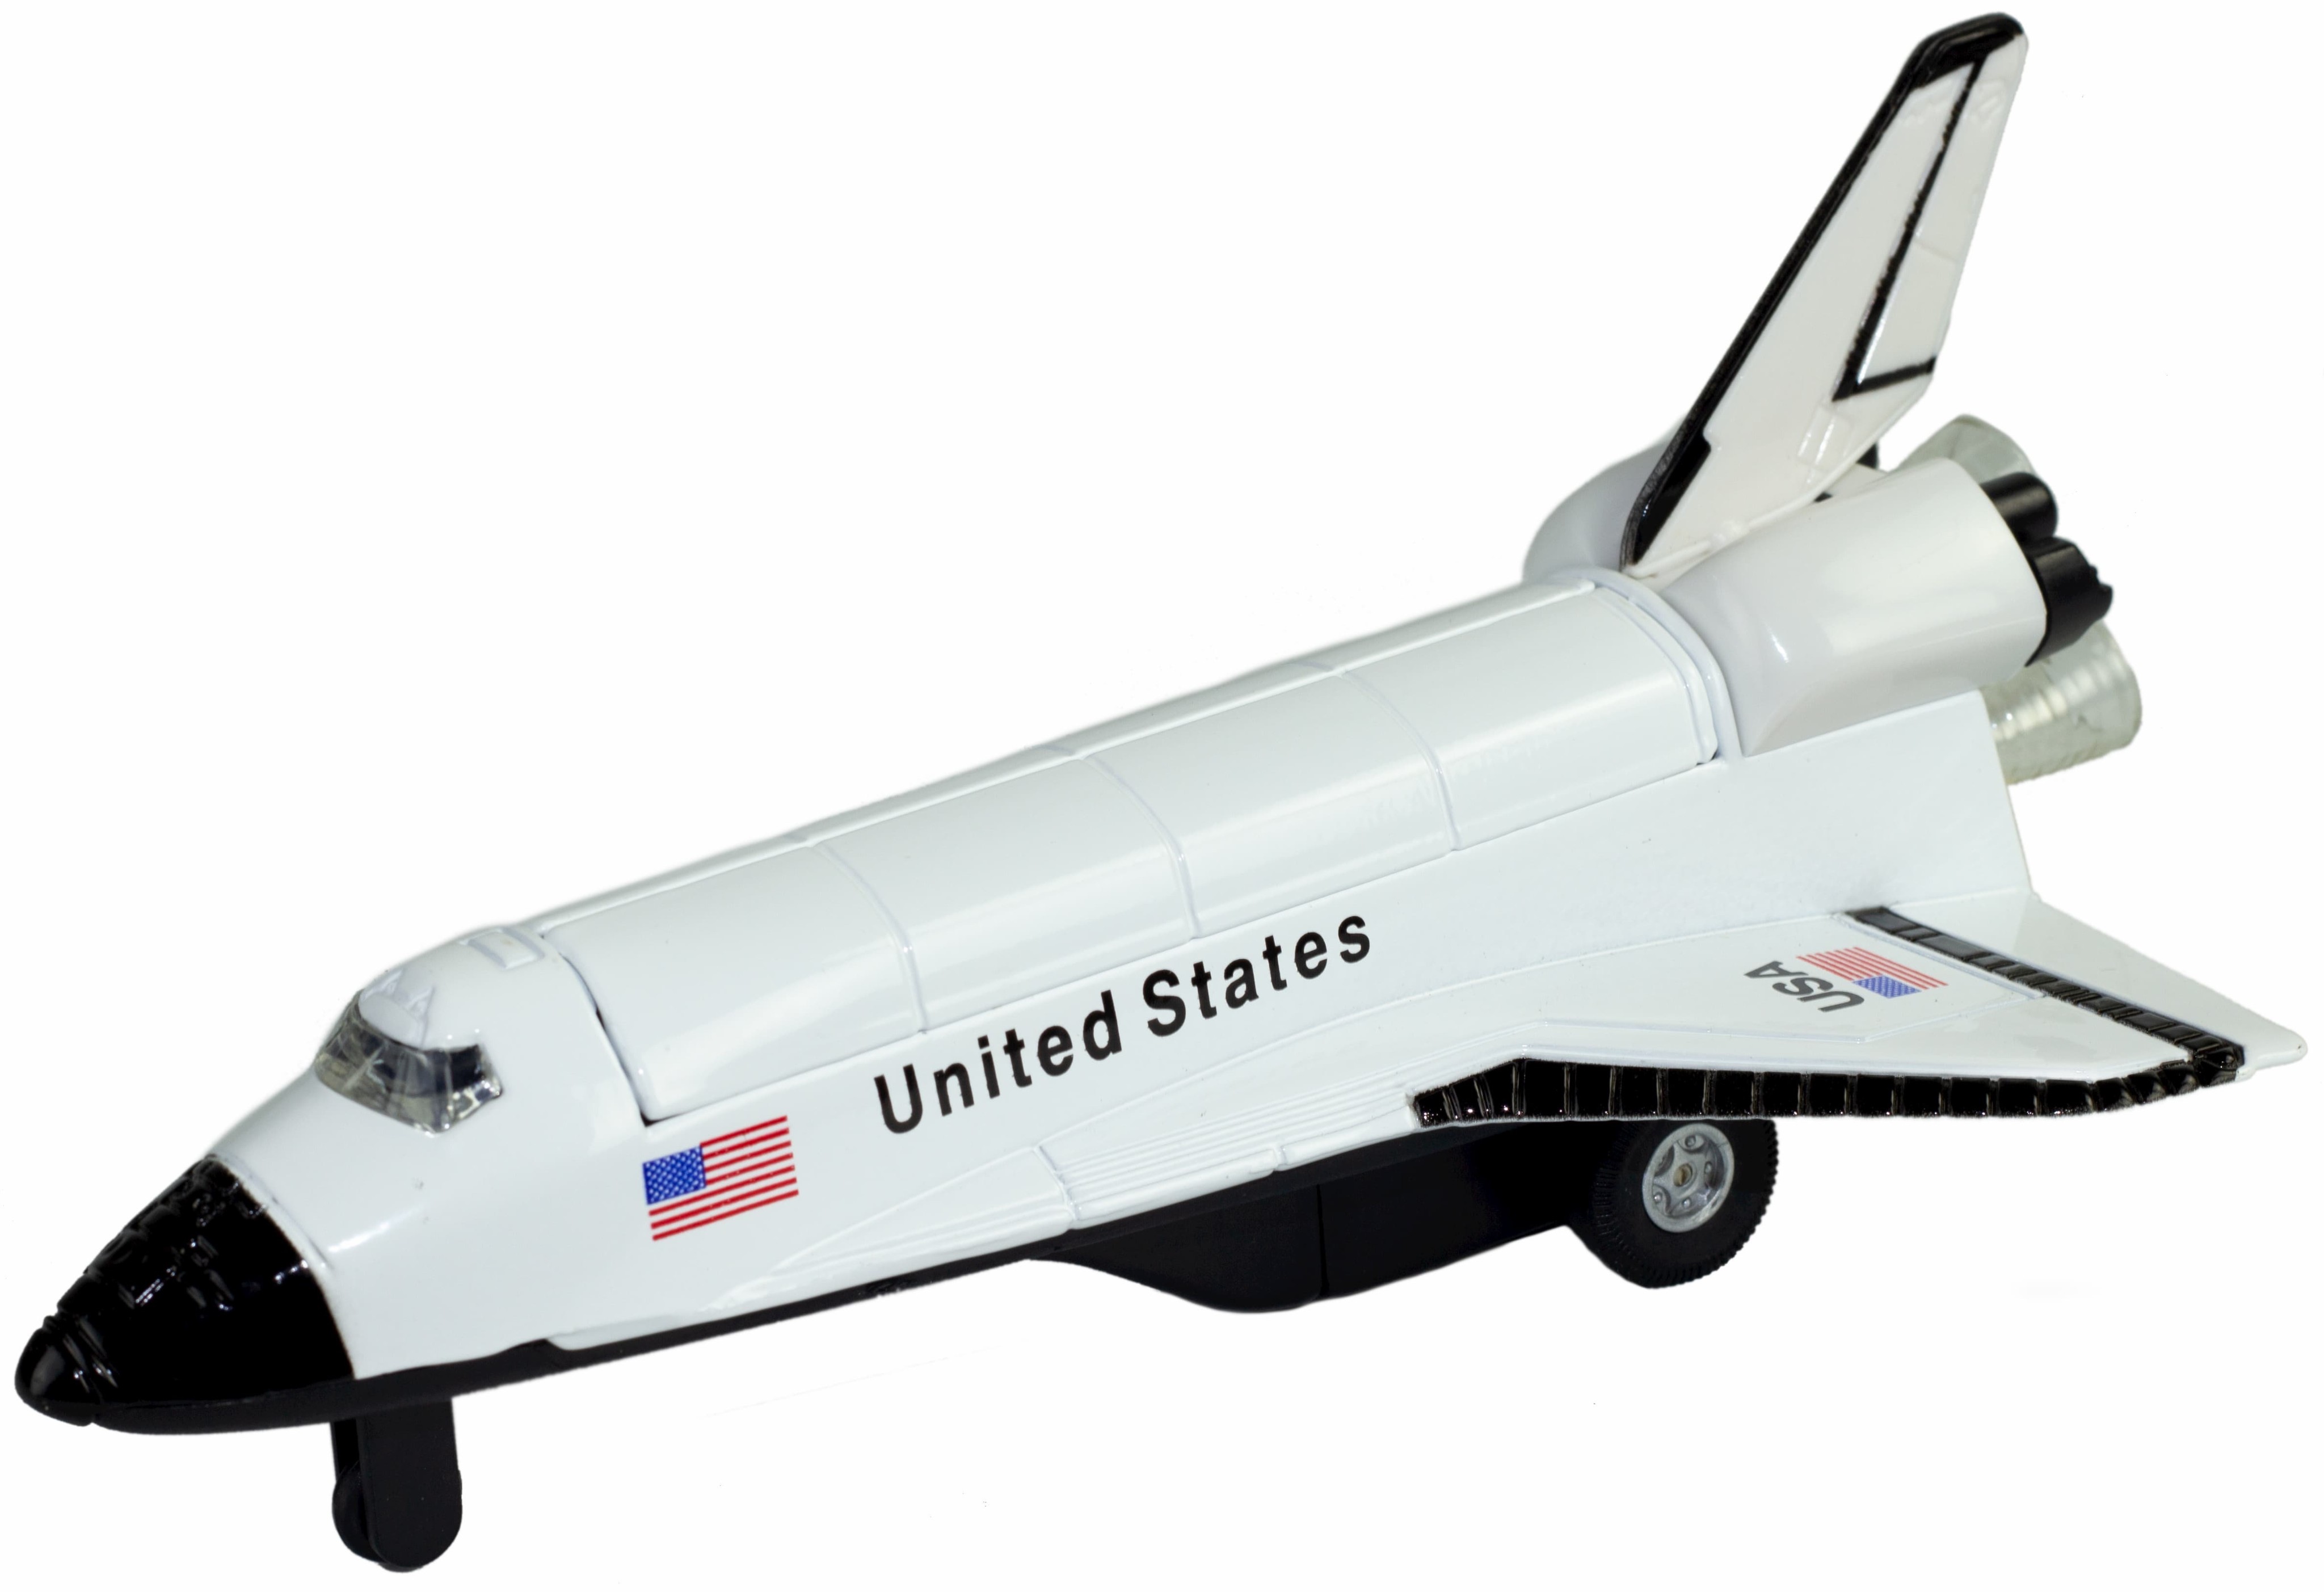 Металлический космический шаттл 1:100 «NASA: United States» 20 см. 290S, свет, звук / Белый